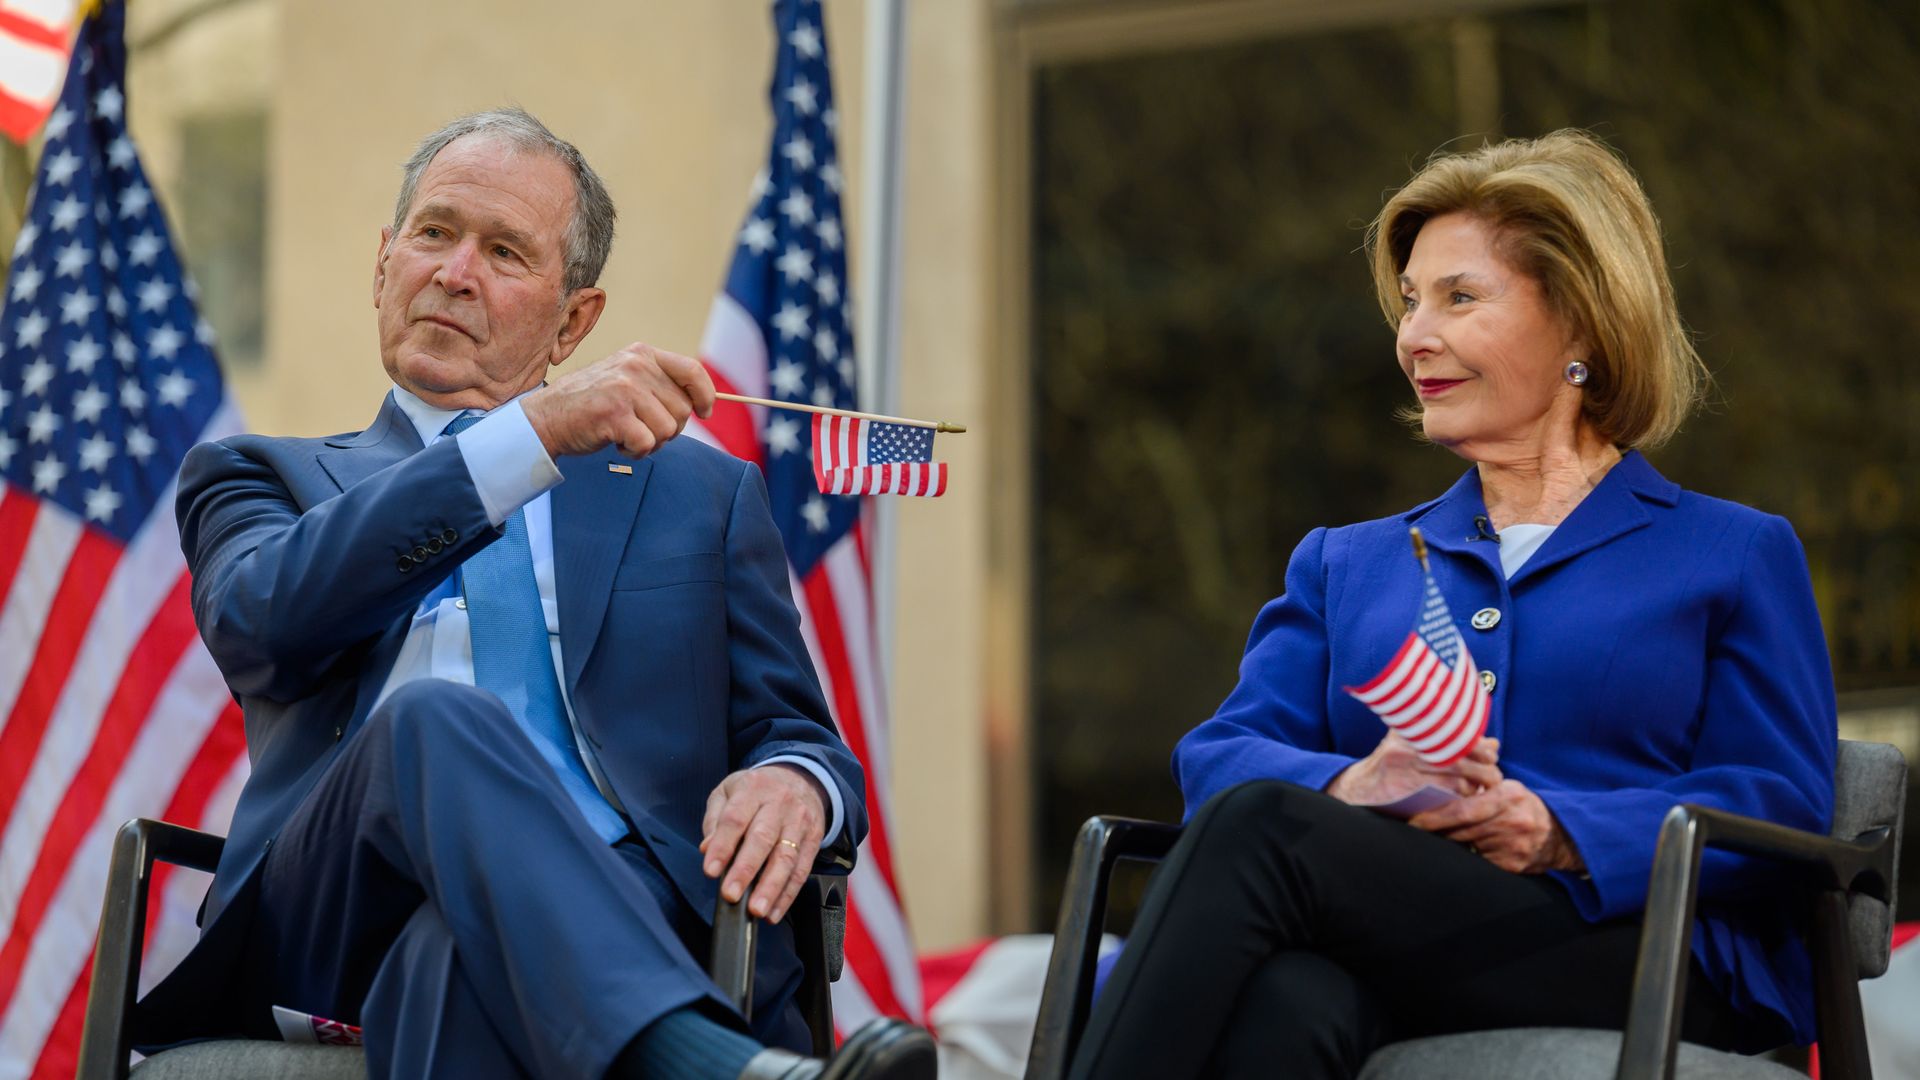 George W. Bush and Laura Bush on Tuesday, April 20, 2021 